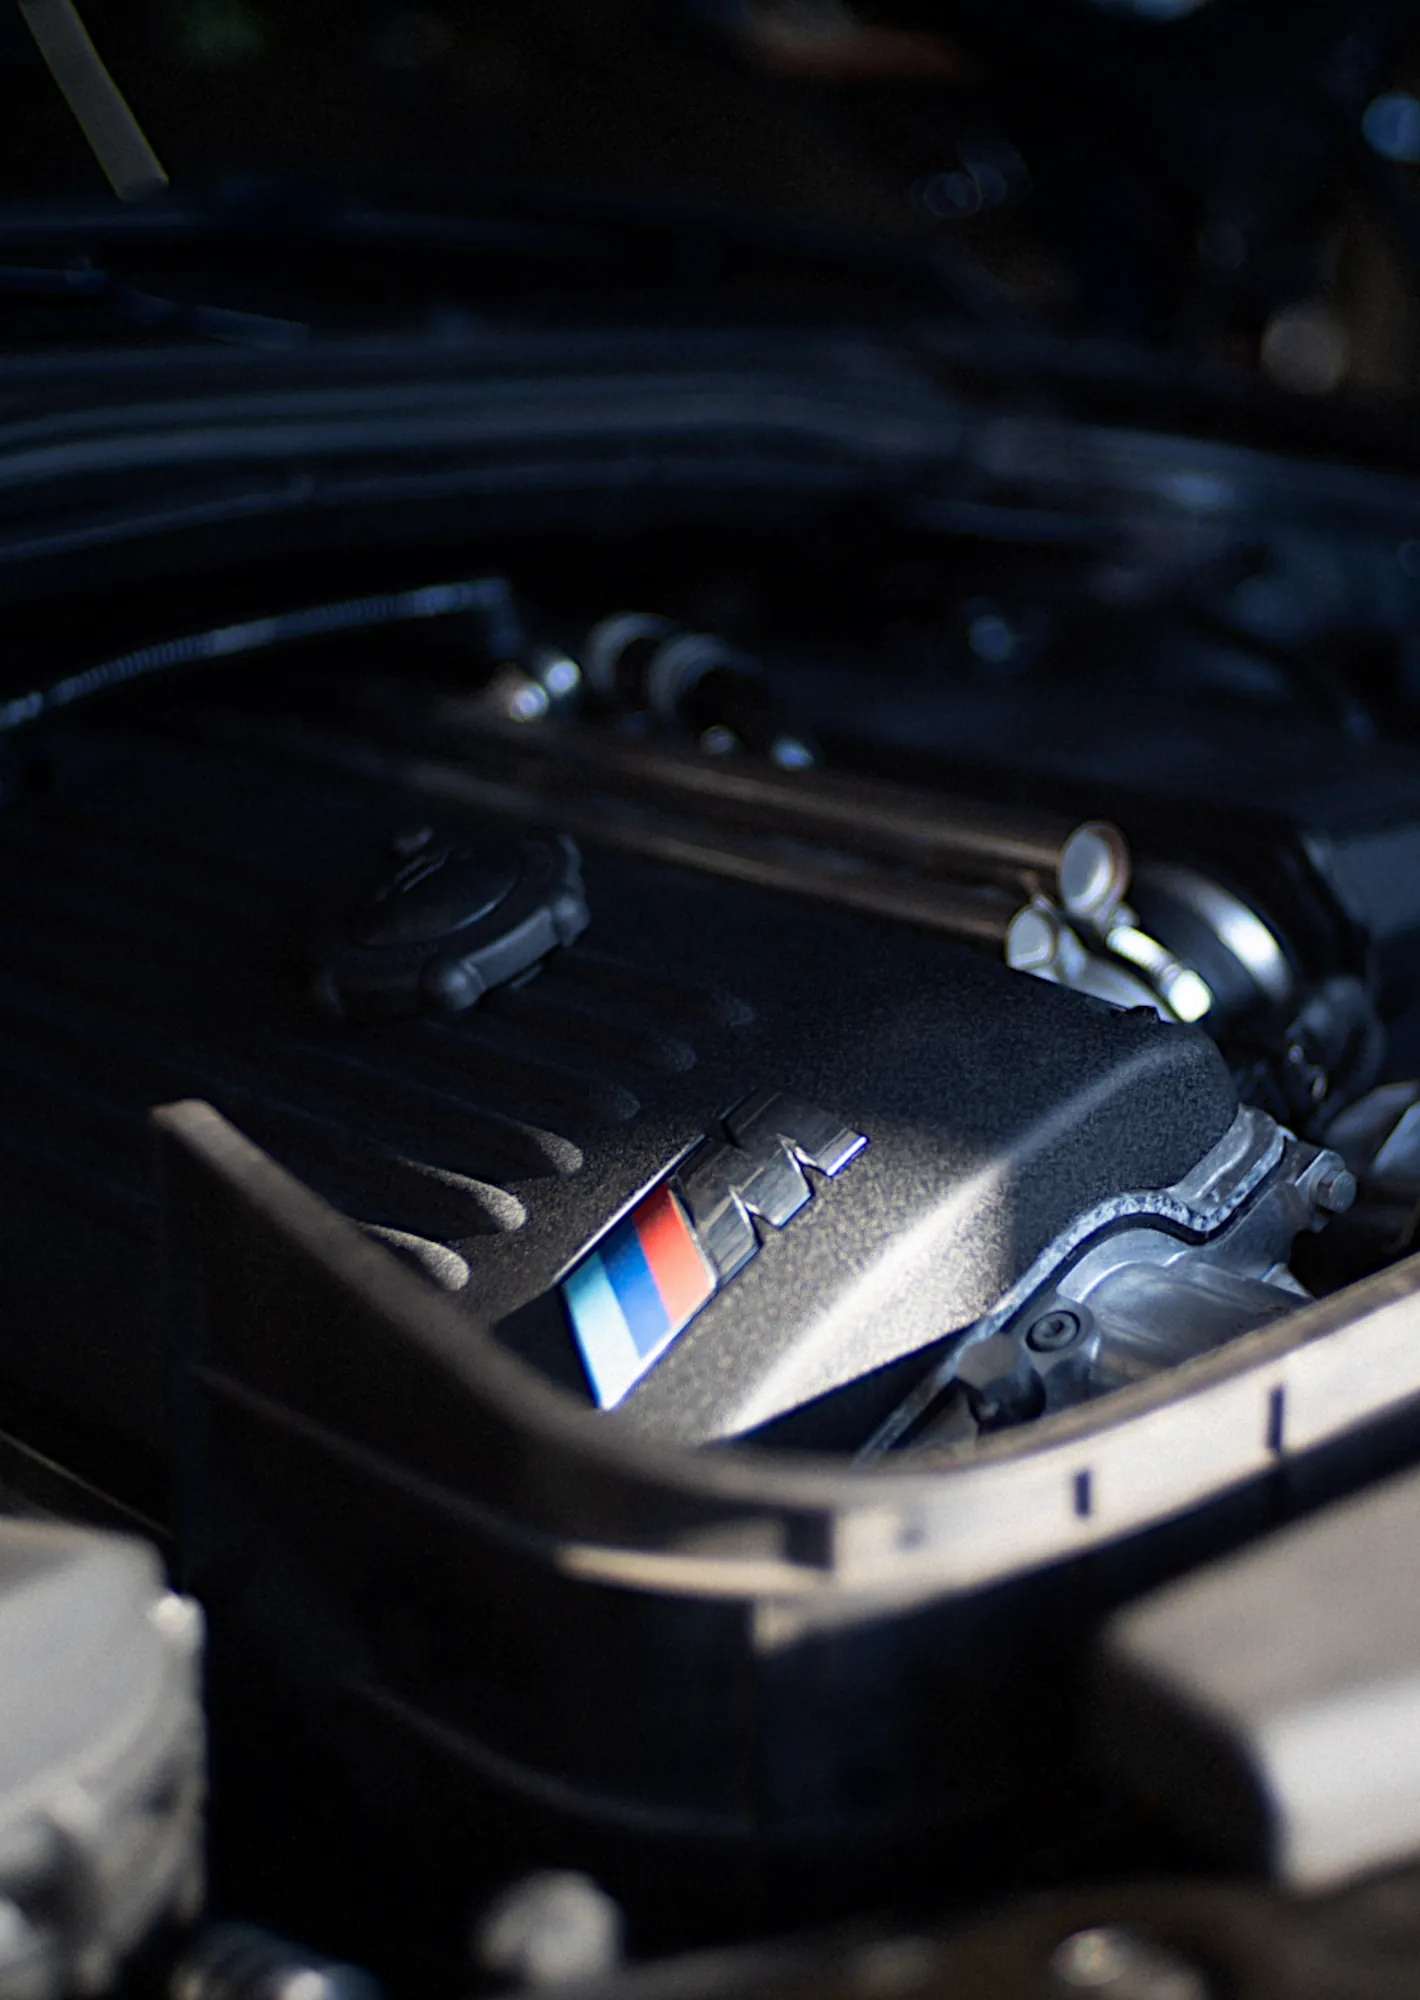 Motorrevision beim BMW E46 M3